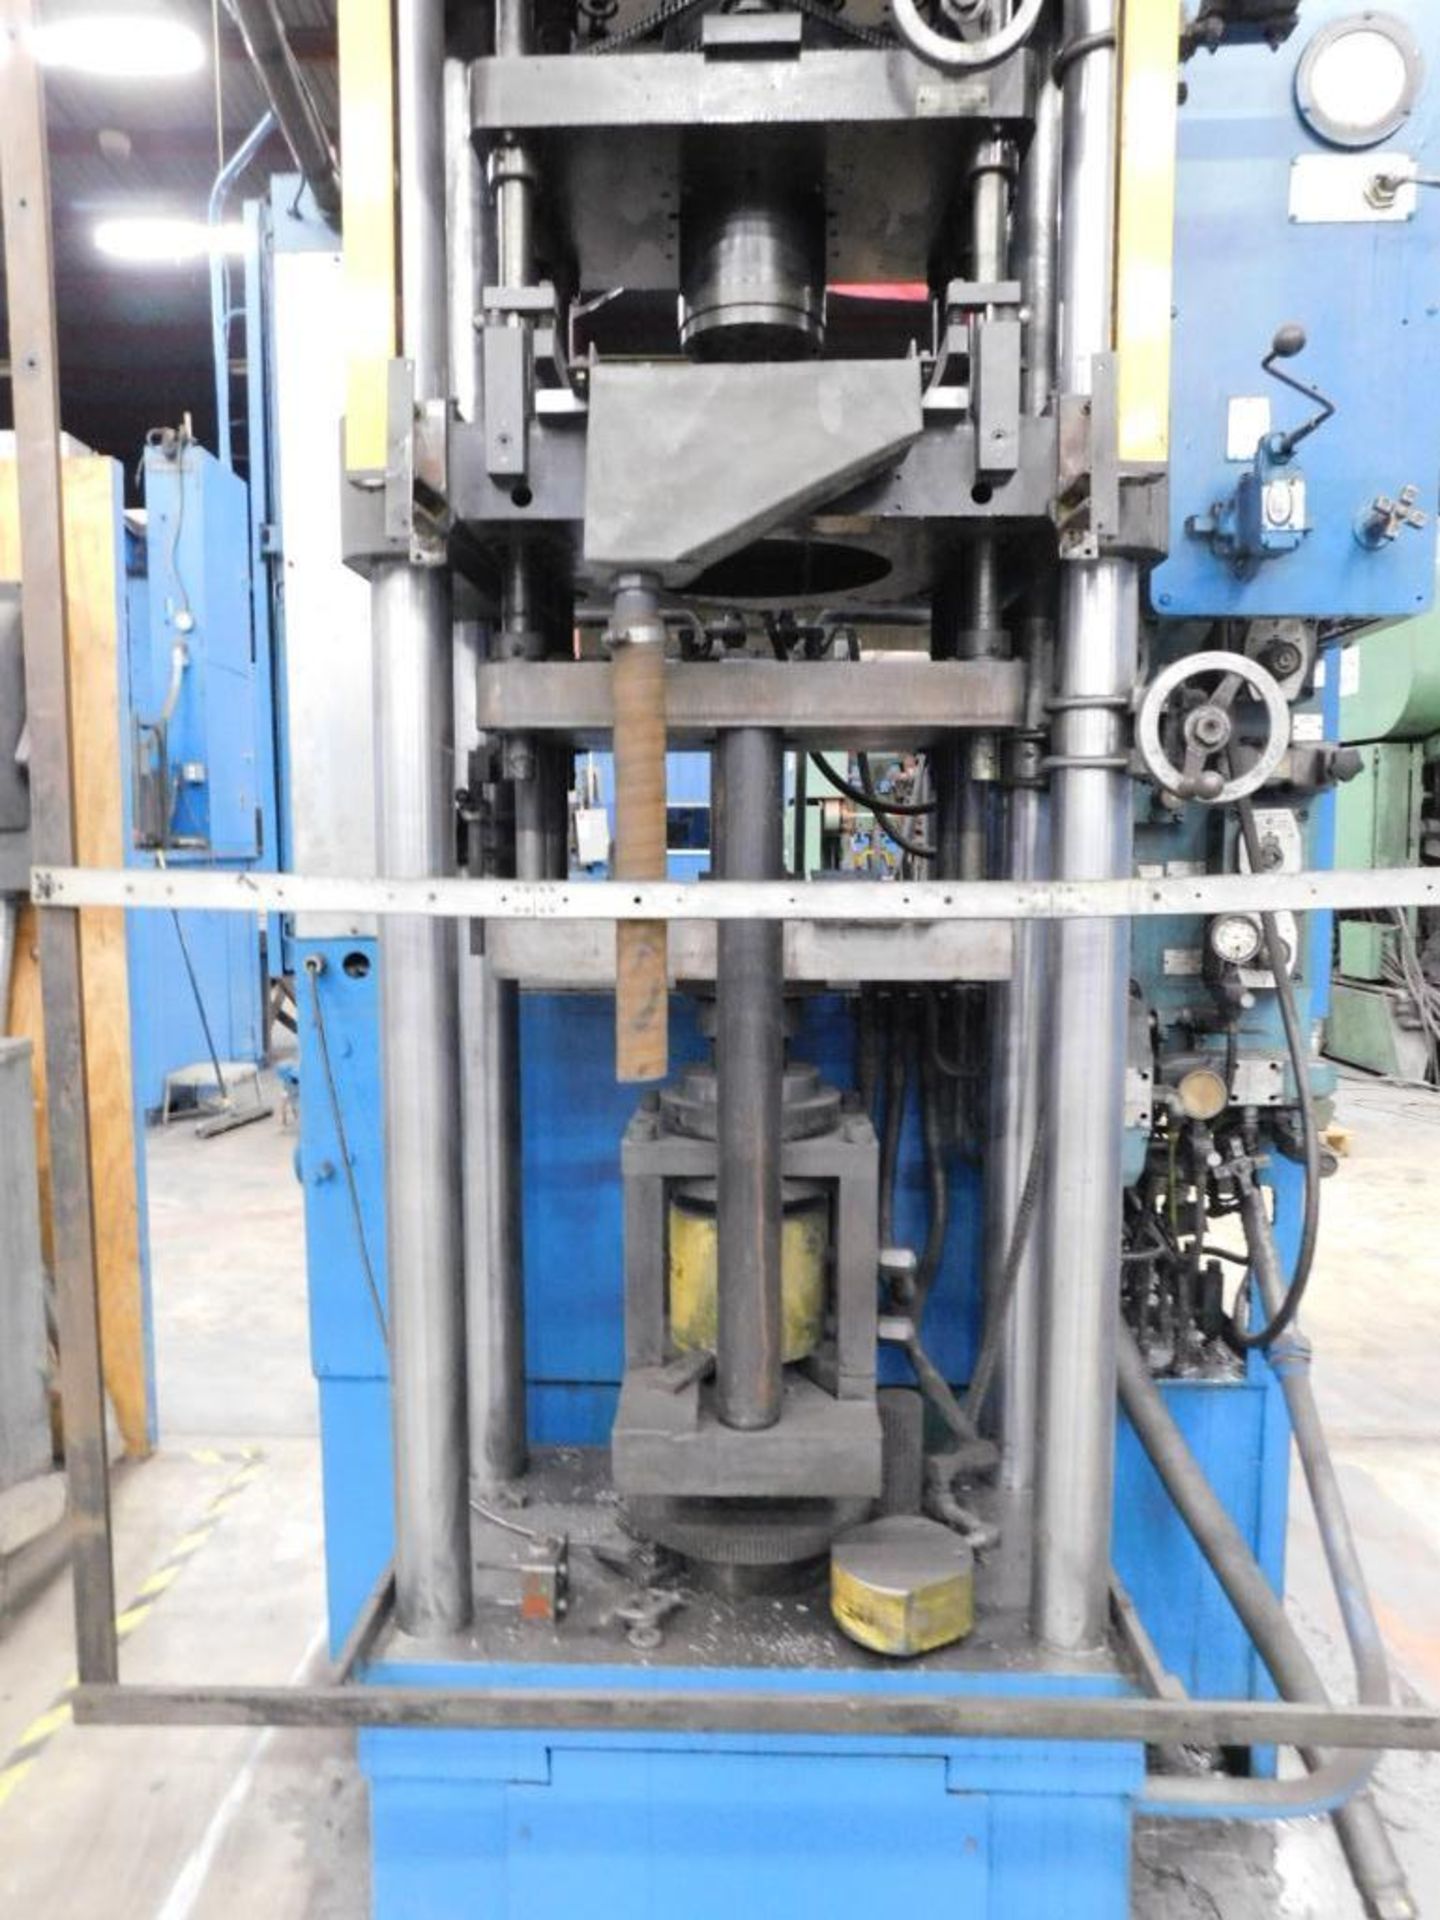 Hydramet Powder Compacting Press, Hydraulic, Model HC-60, 60 Ton Maximum Pressing Force, 5" Maximum - Image 12 of 21